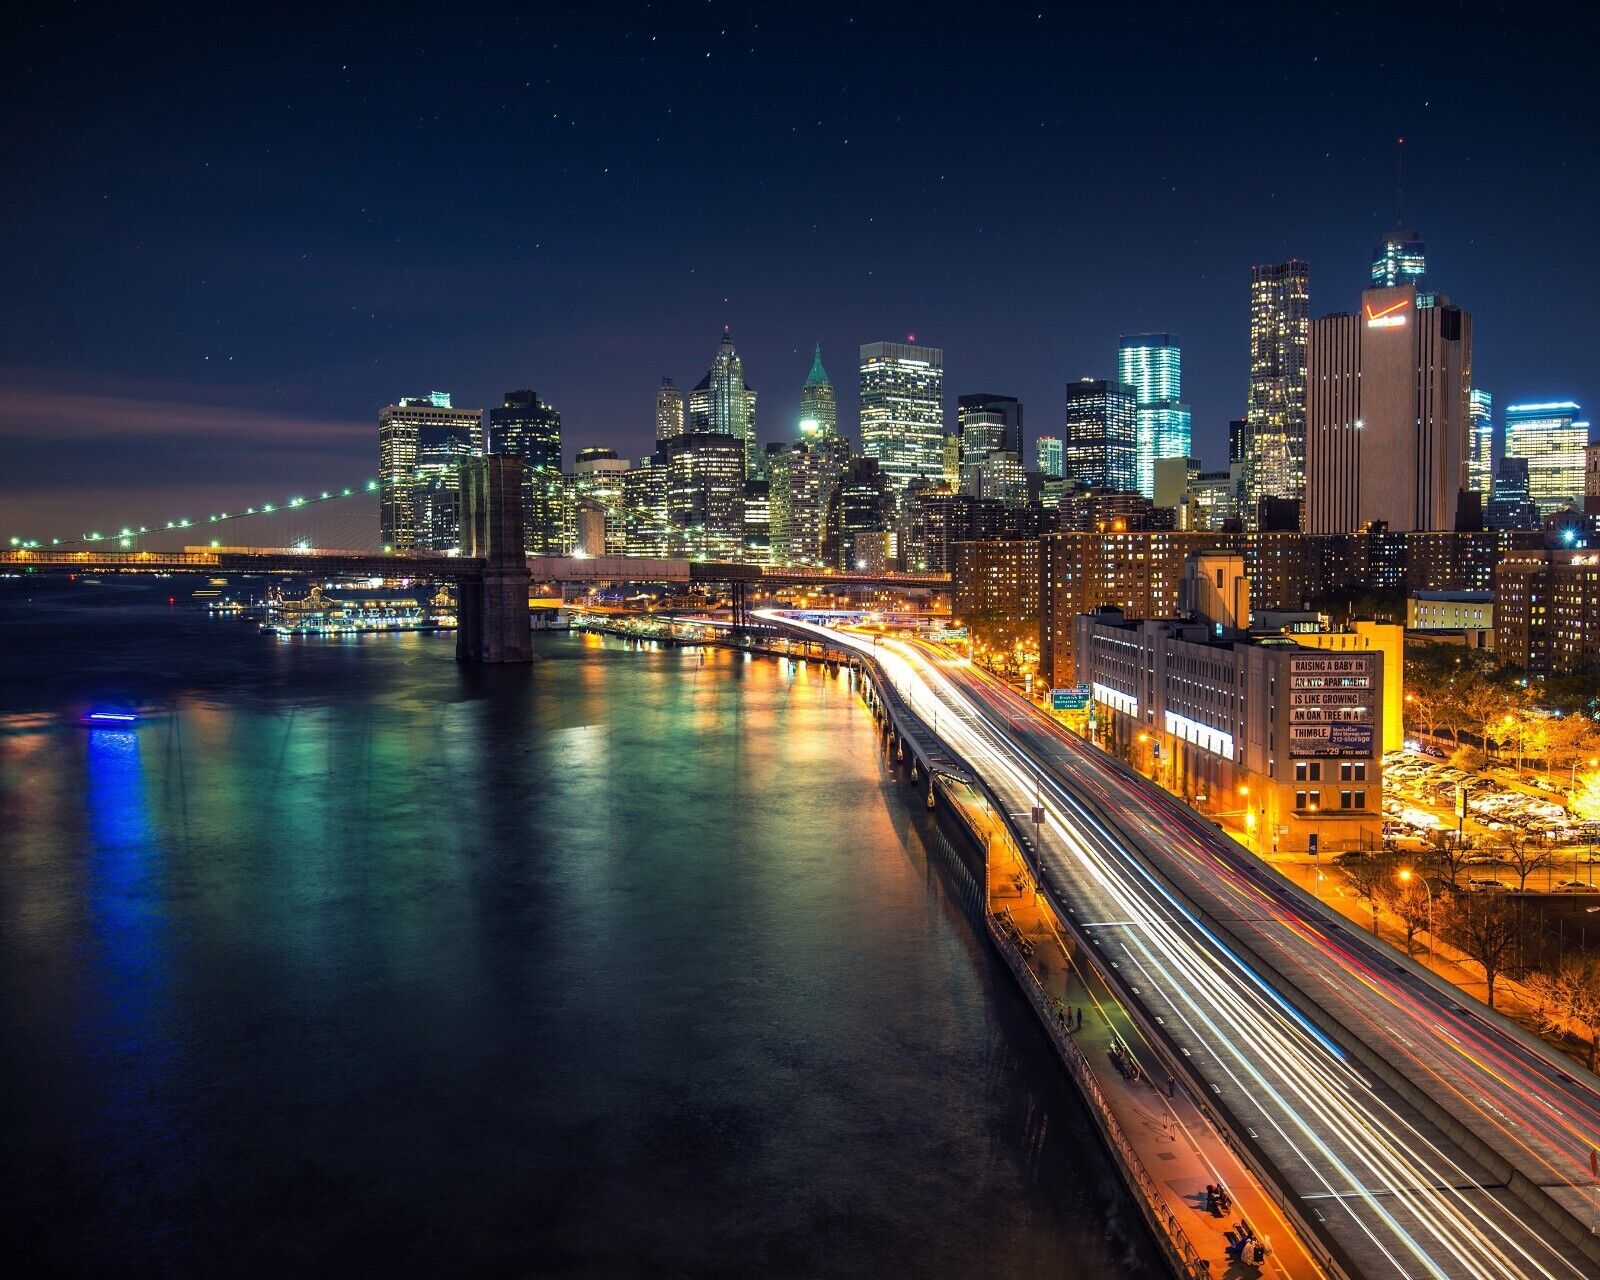 Brooklyn New York City NYC Skyline at Night 8X10 Photo Glossy Print